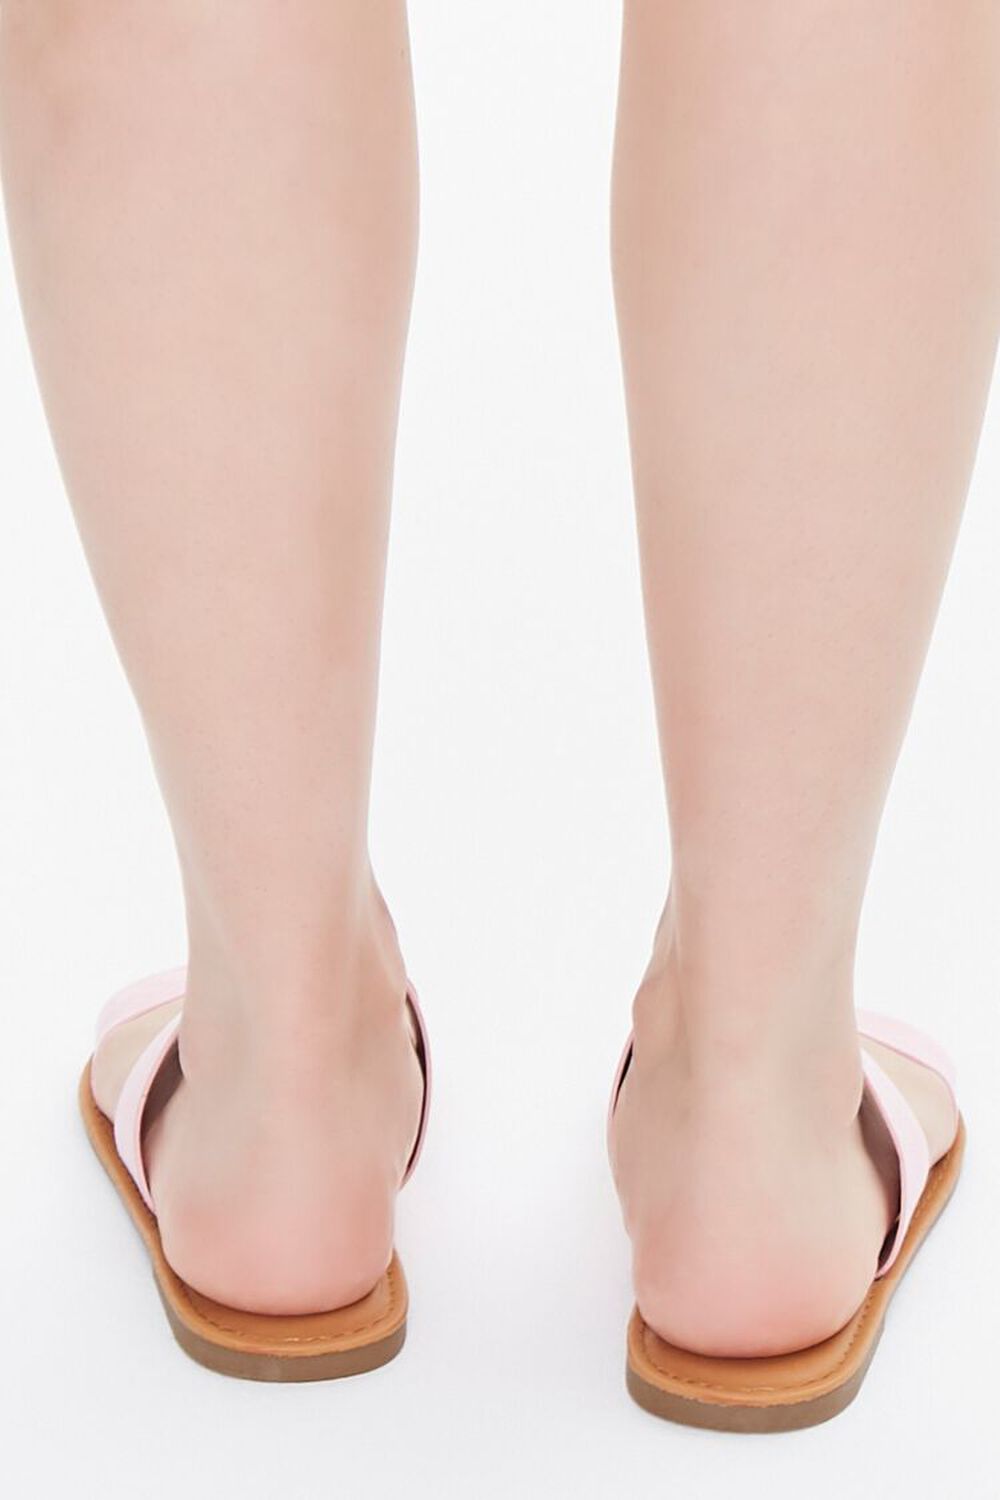 PINK Faux Suede Dual-Strap Sandals, image 3